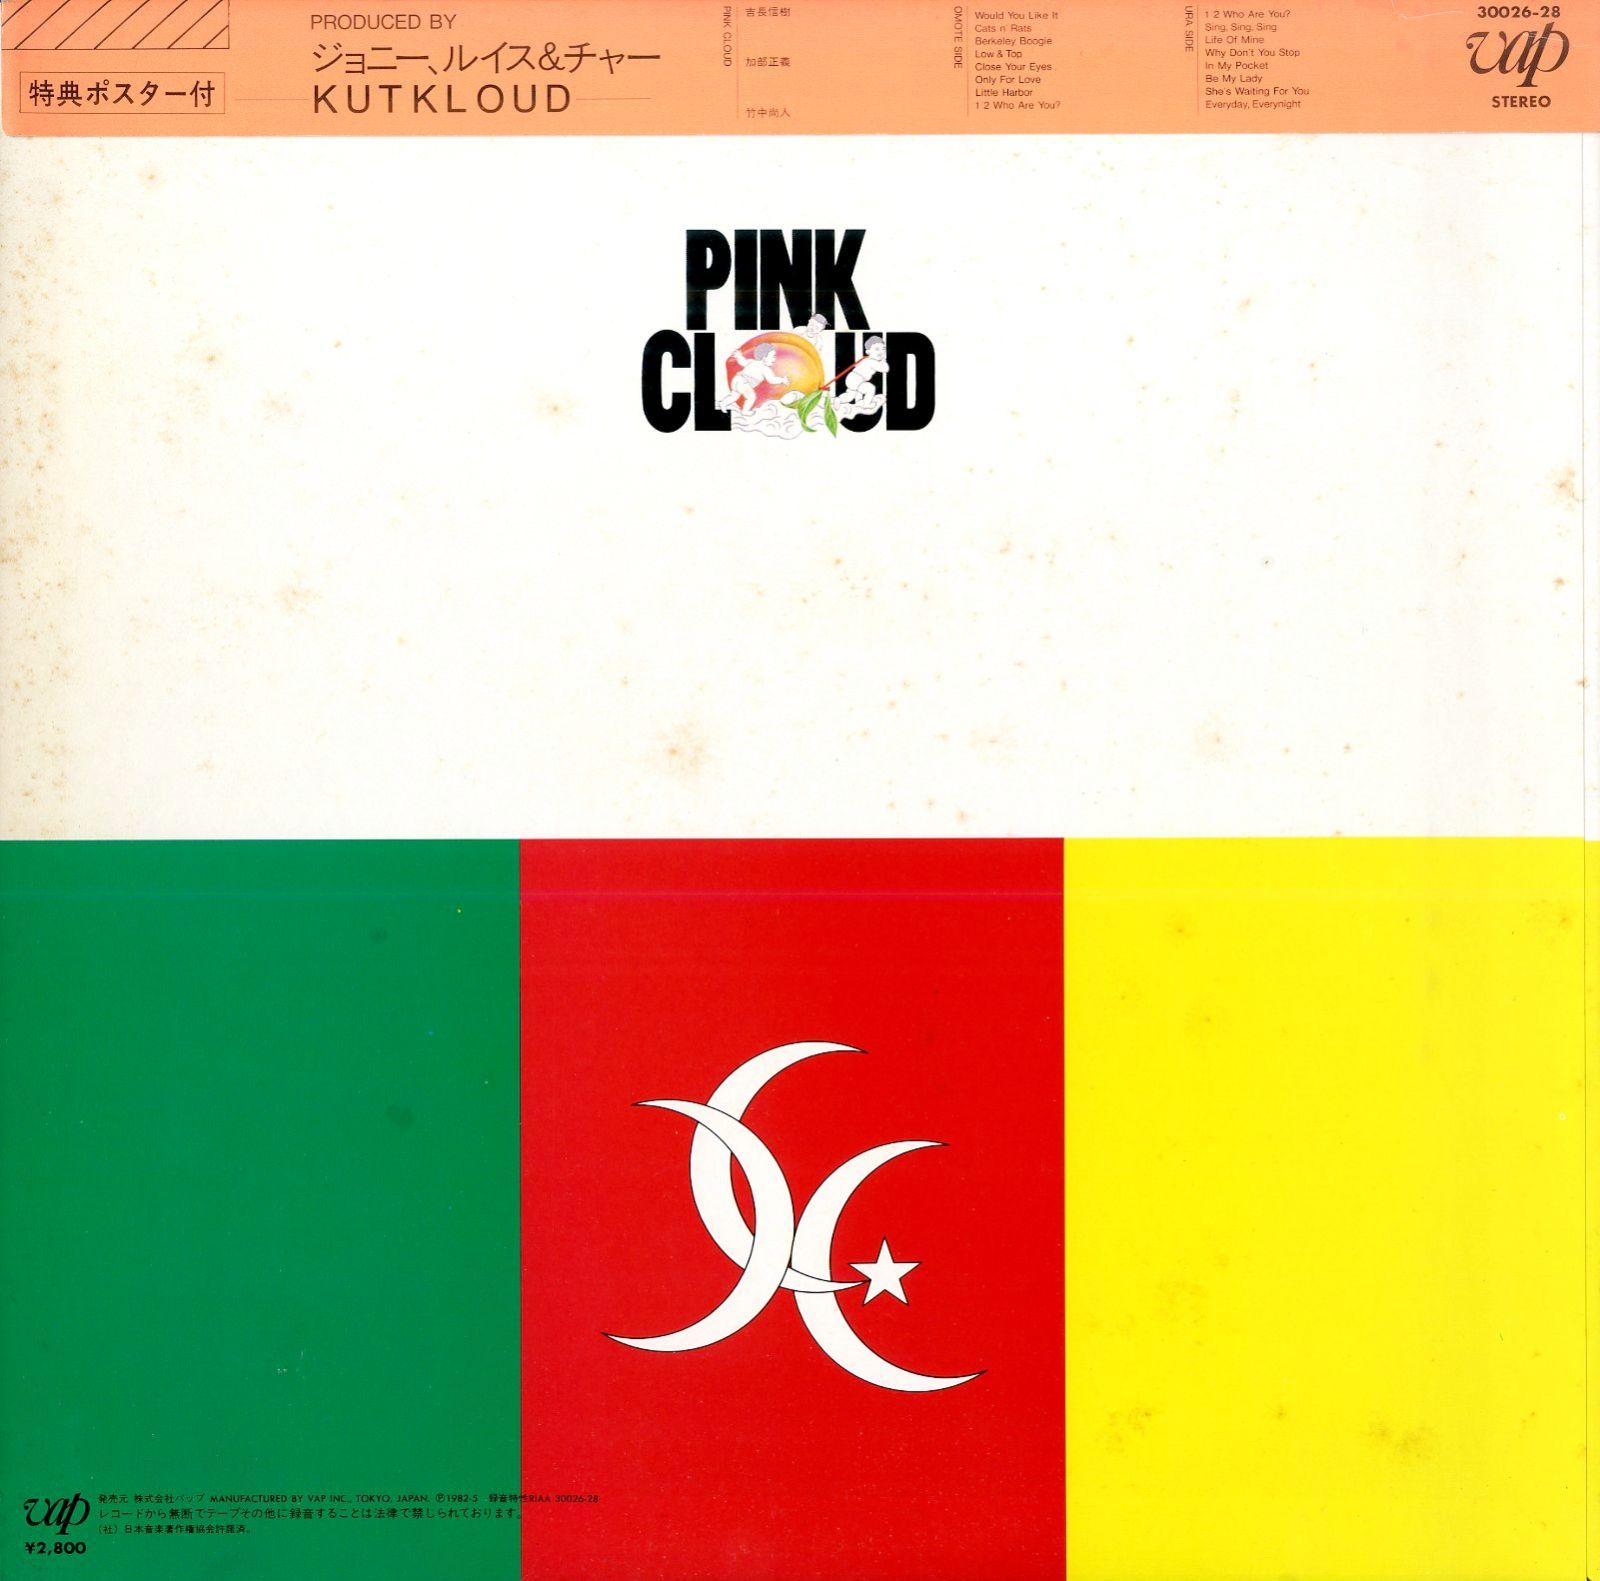 LP1枚 / PINK CLOUD (ピンク・クラウド・CHAR・竹中尚人) / Kutkloud  (1982年・30026-28・ブルースロック・ジャズロック・ディスコ・DISCO - メルカリ